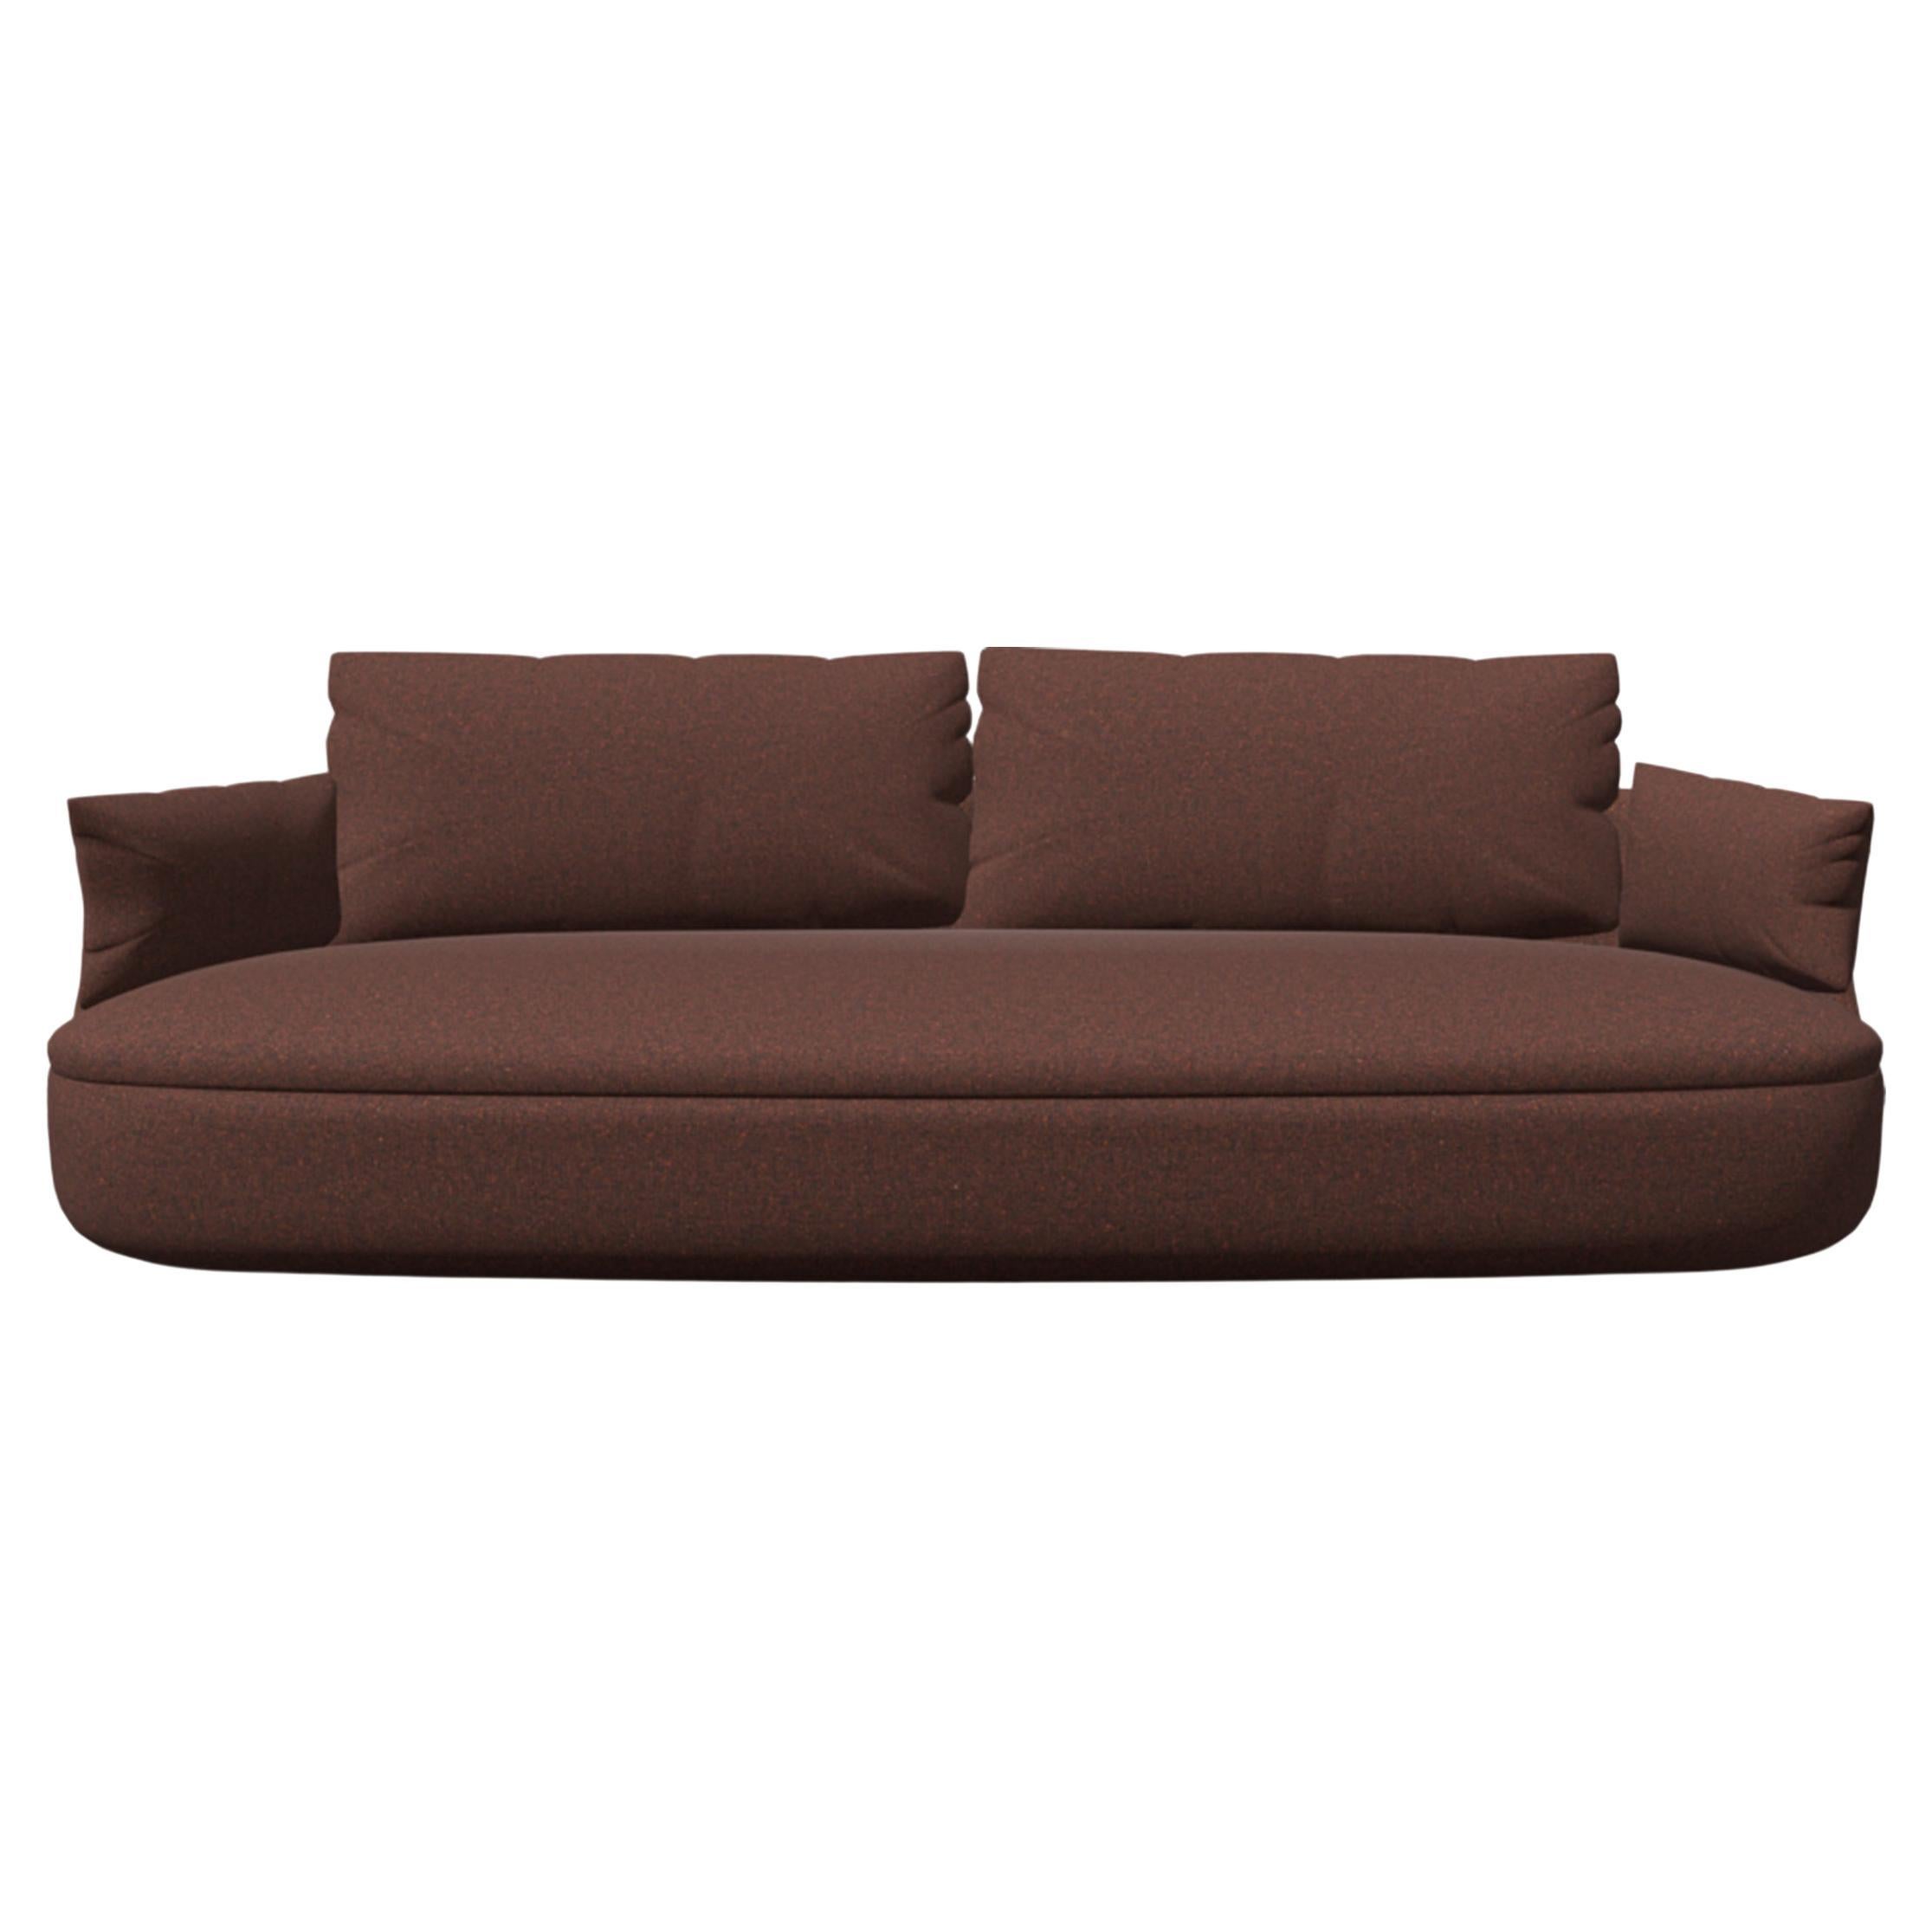 Moooi Bart Basic Sofa in Solis, Sunset Red Upholstery